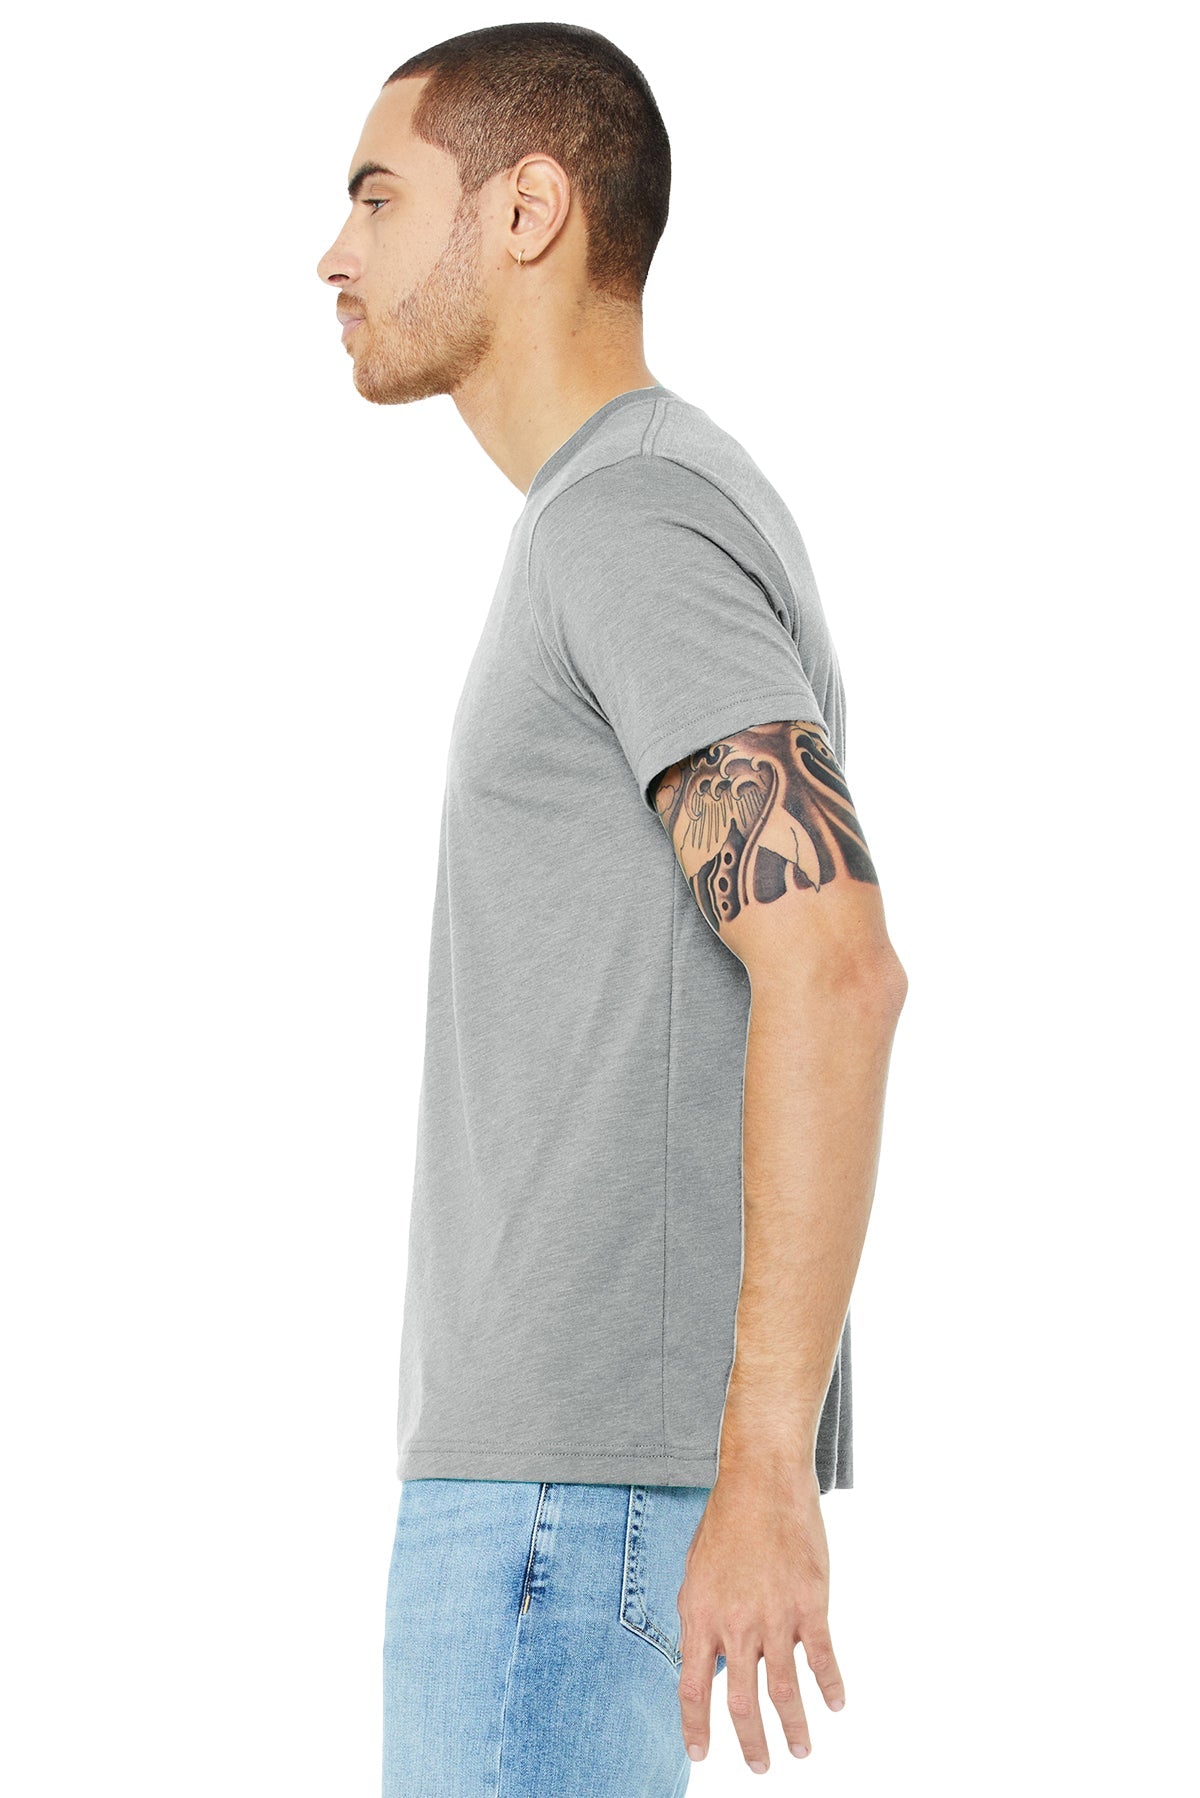 bella + canvas unisex triblend short sleeve t-shirt 3413c ath grey trblnd